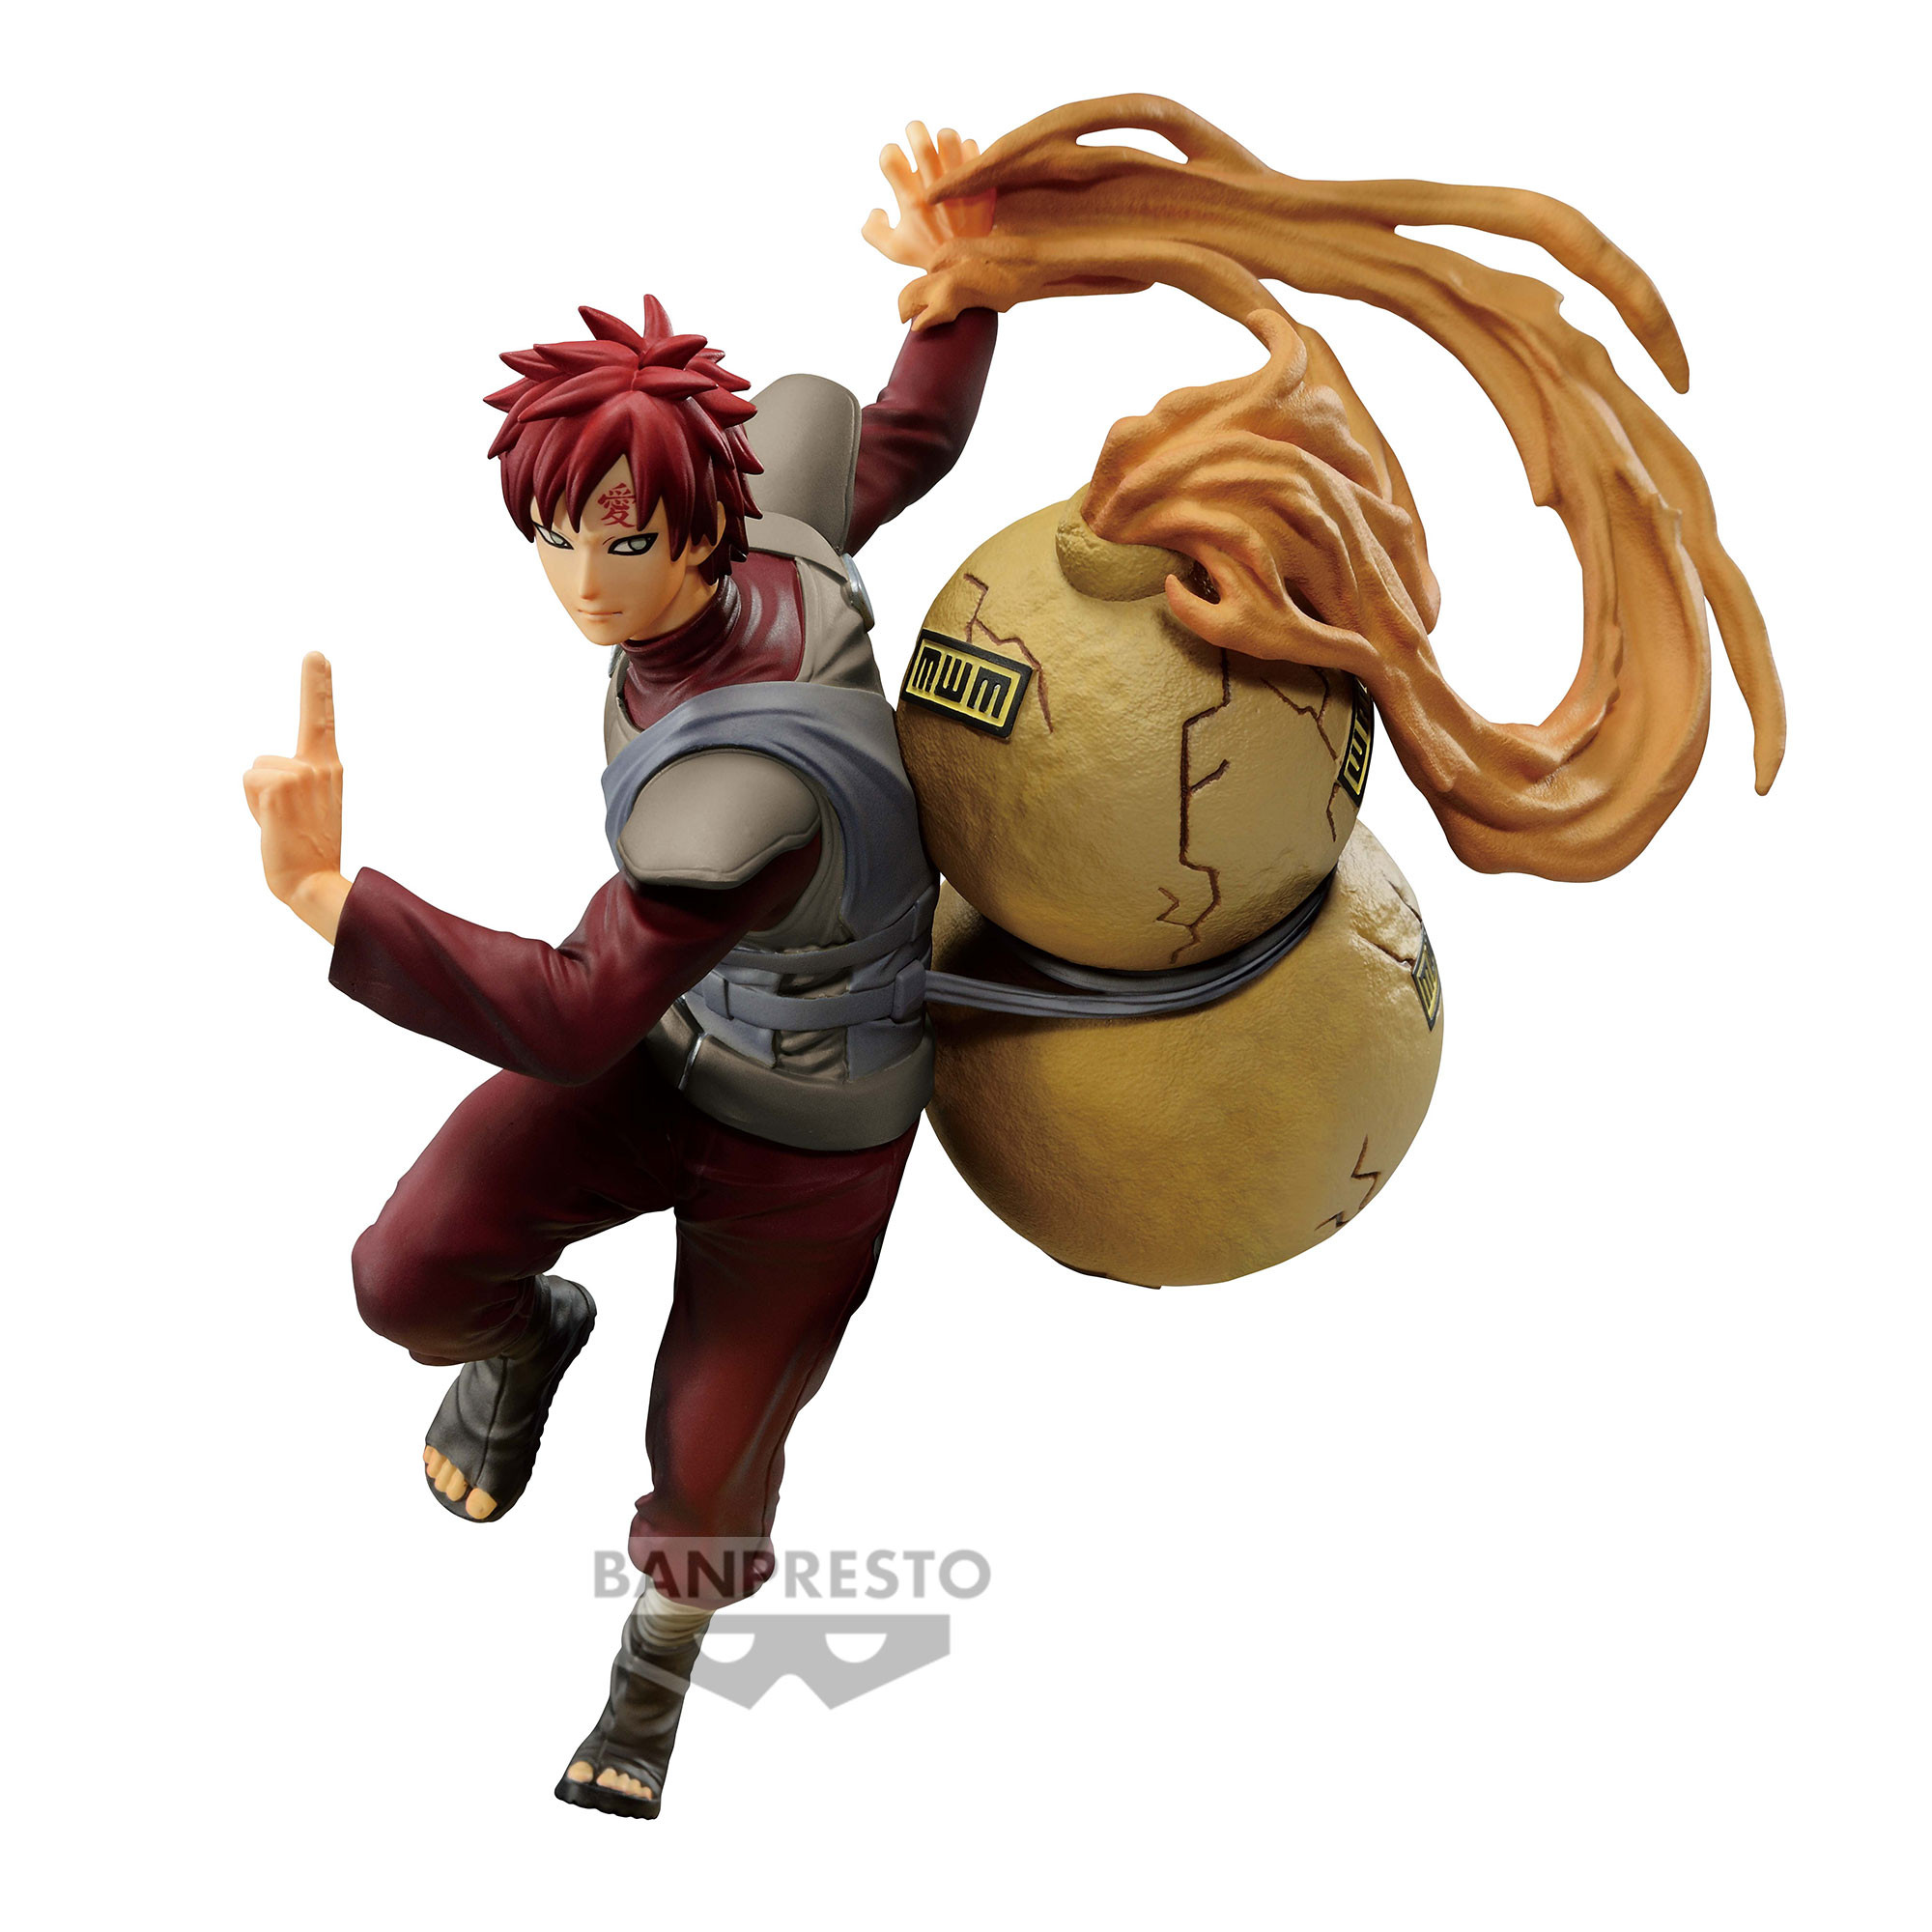 Acheter Funko Pop! Animation: Naruto - Gaara - Figurines prix